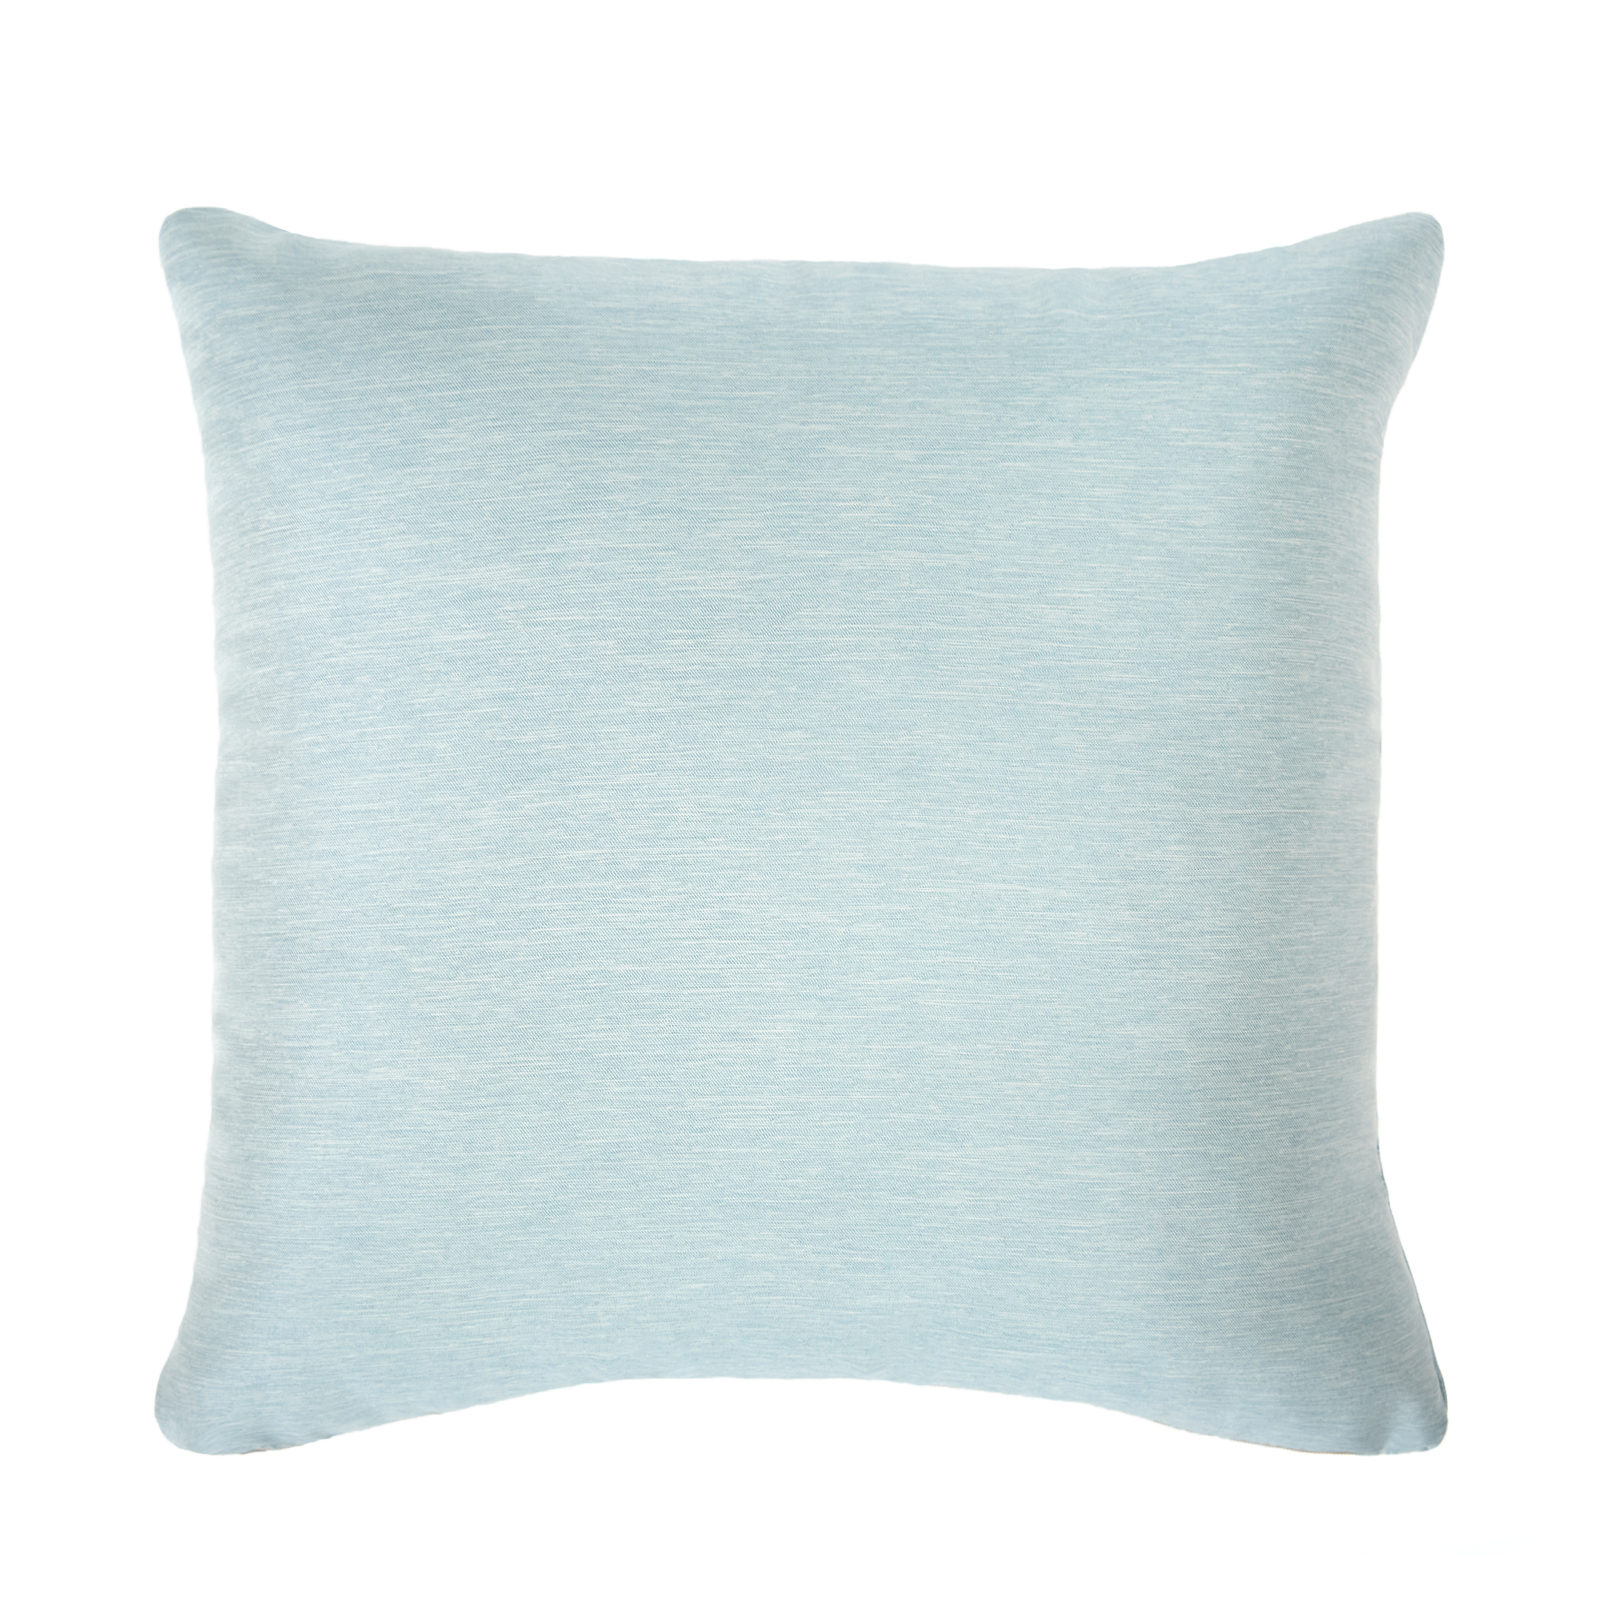 Подушка декоративная Carelli подушка для растяжки голубой